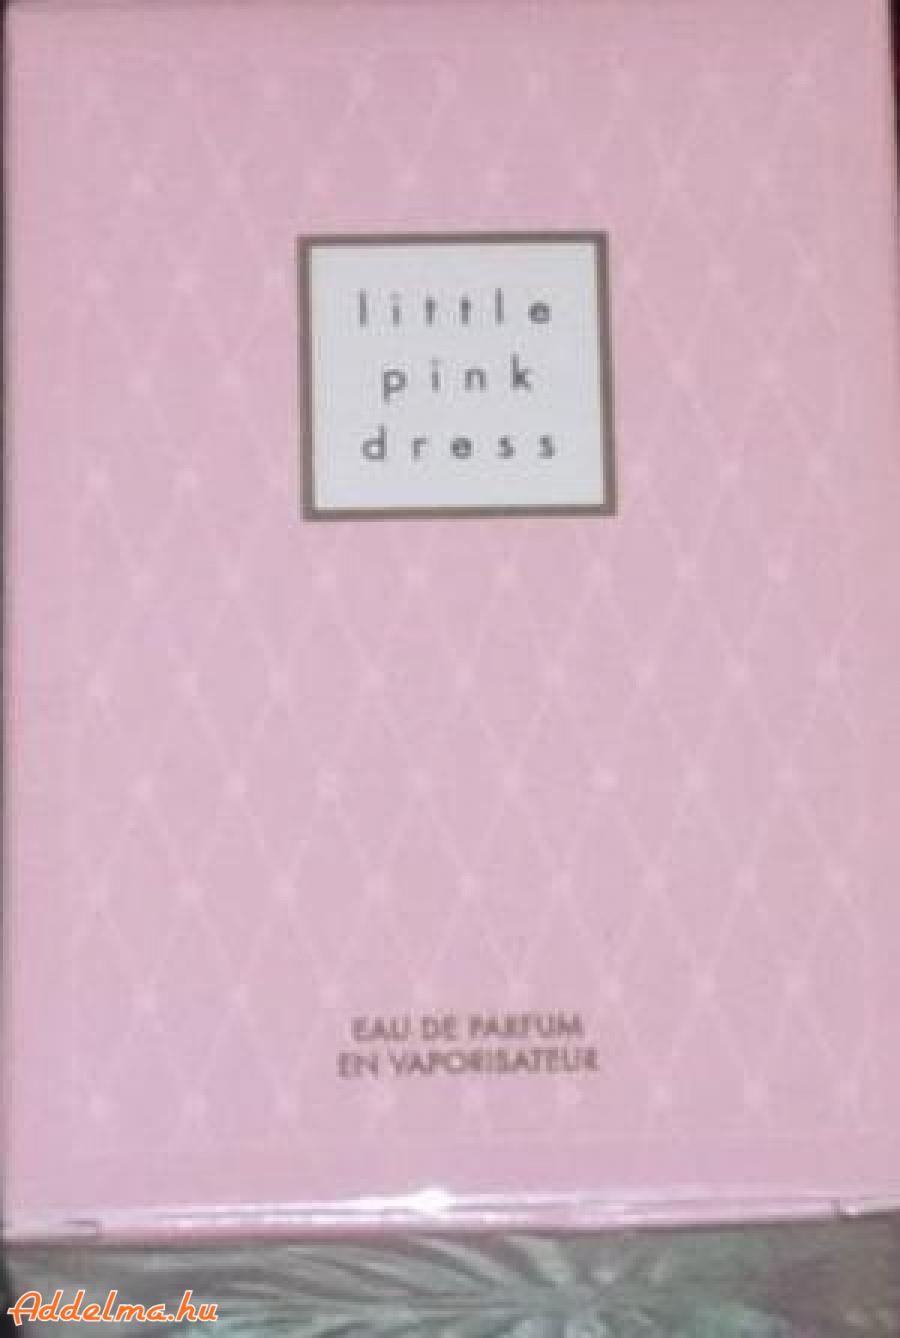 Avon Little Pink Dress parfüm eladó